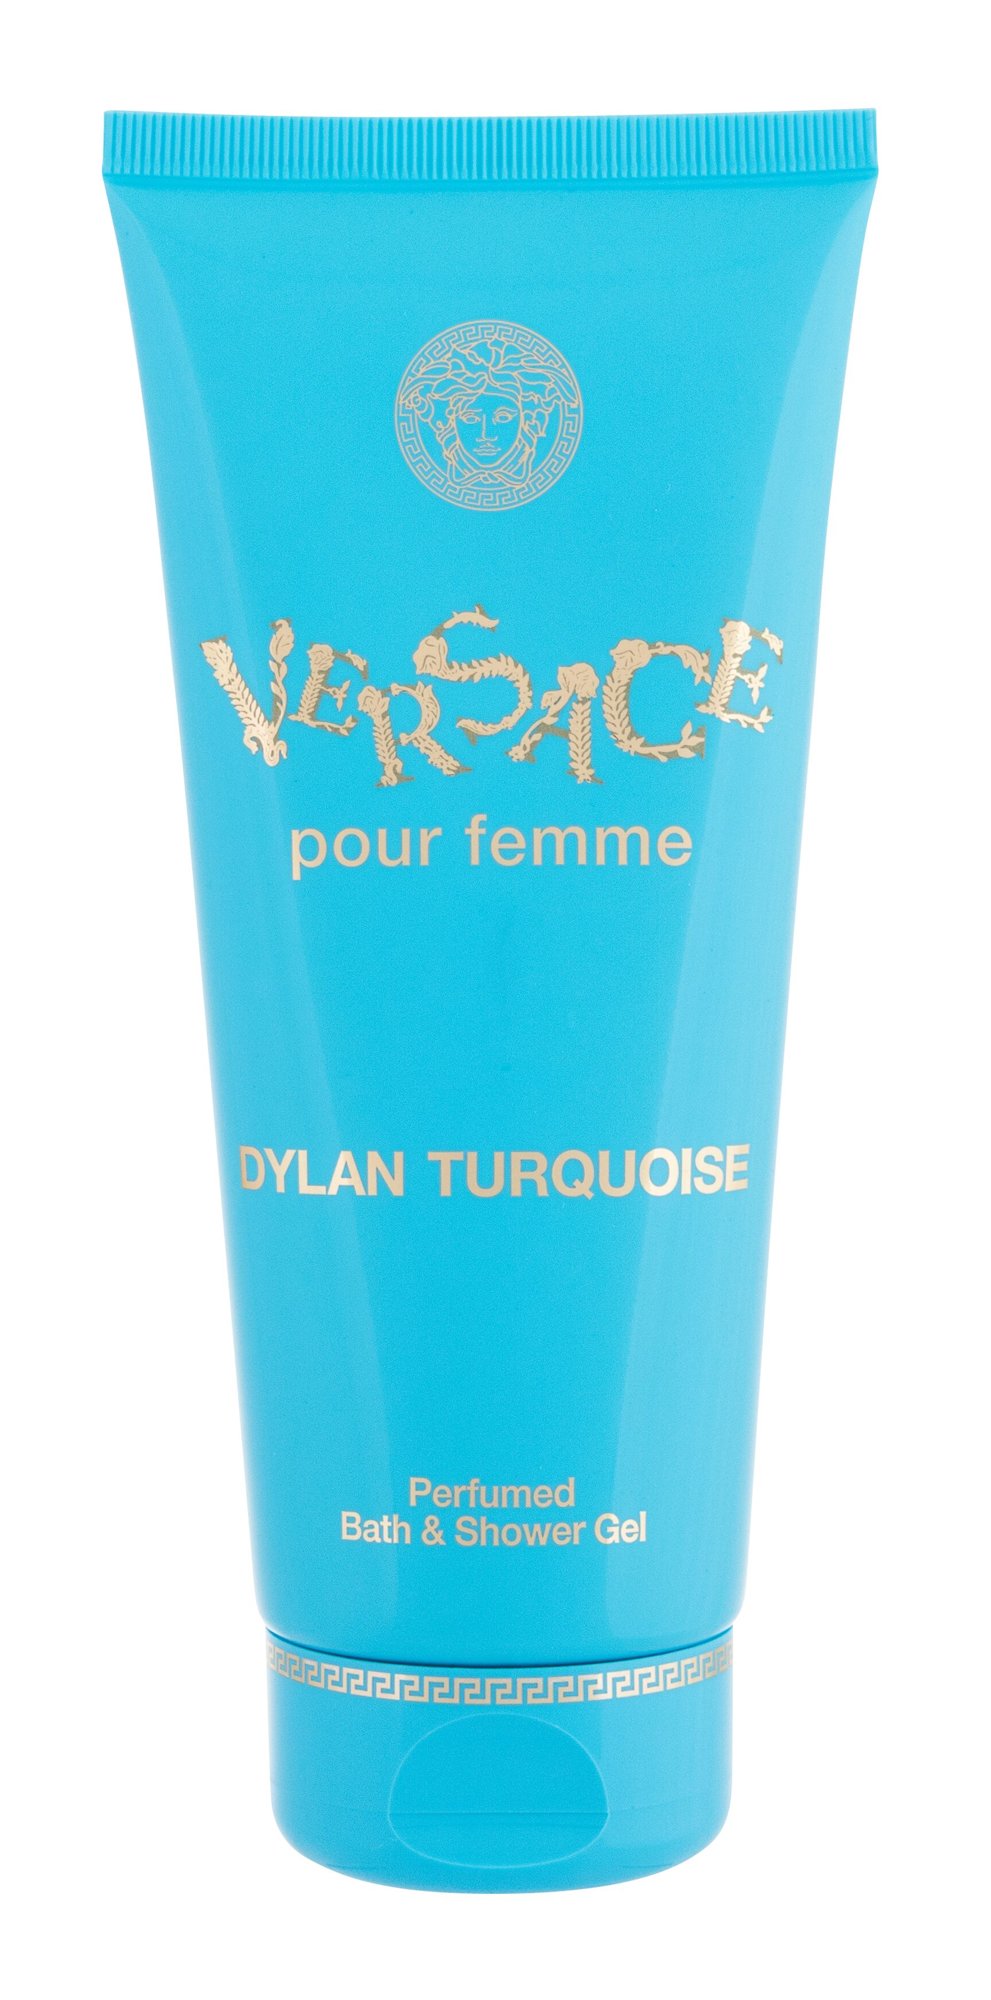 Versace Dylan Turquoise 200ml dušo želė